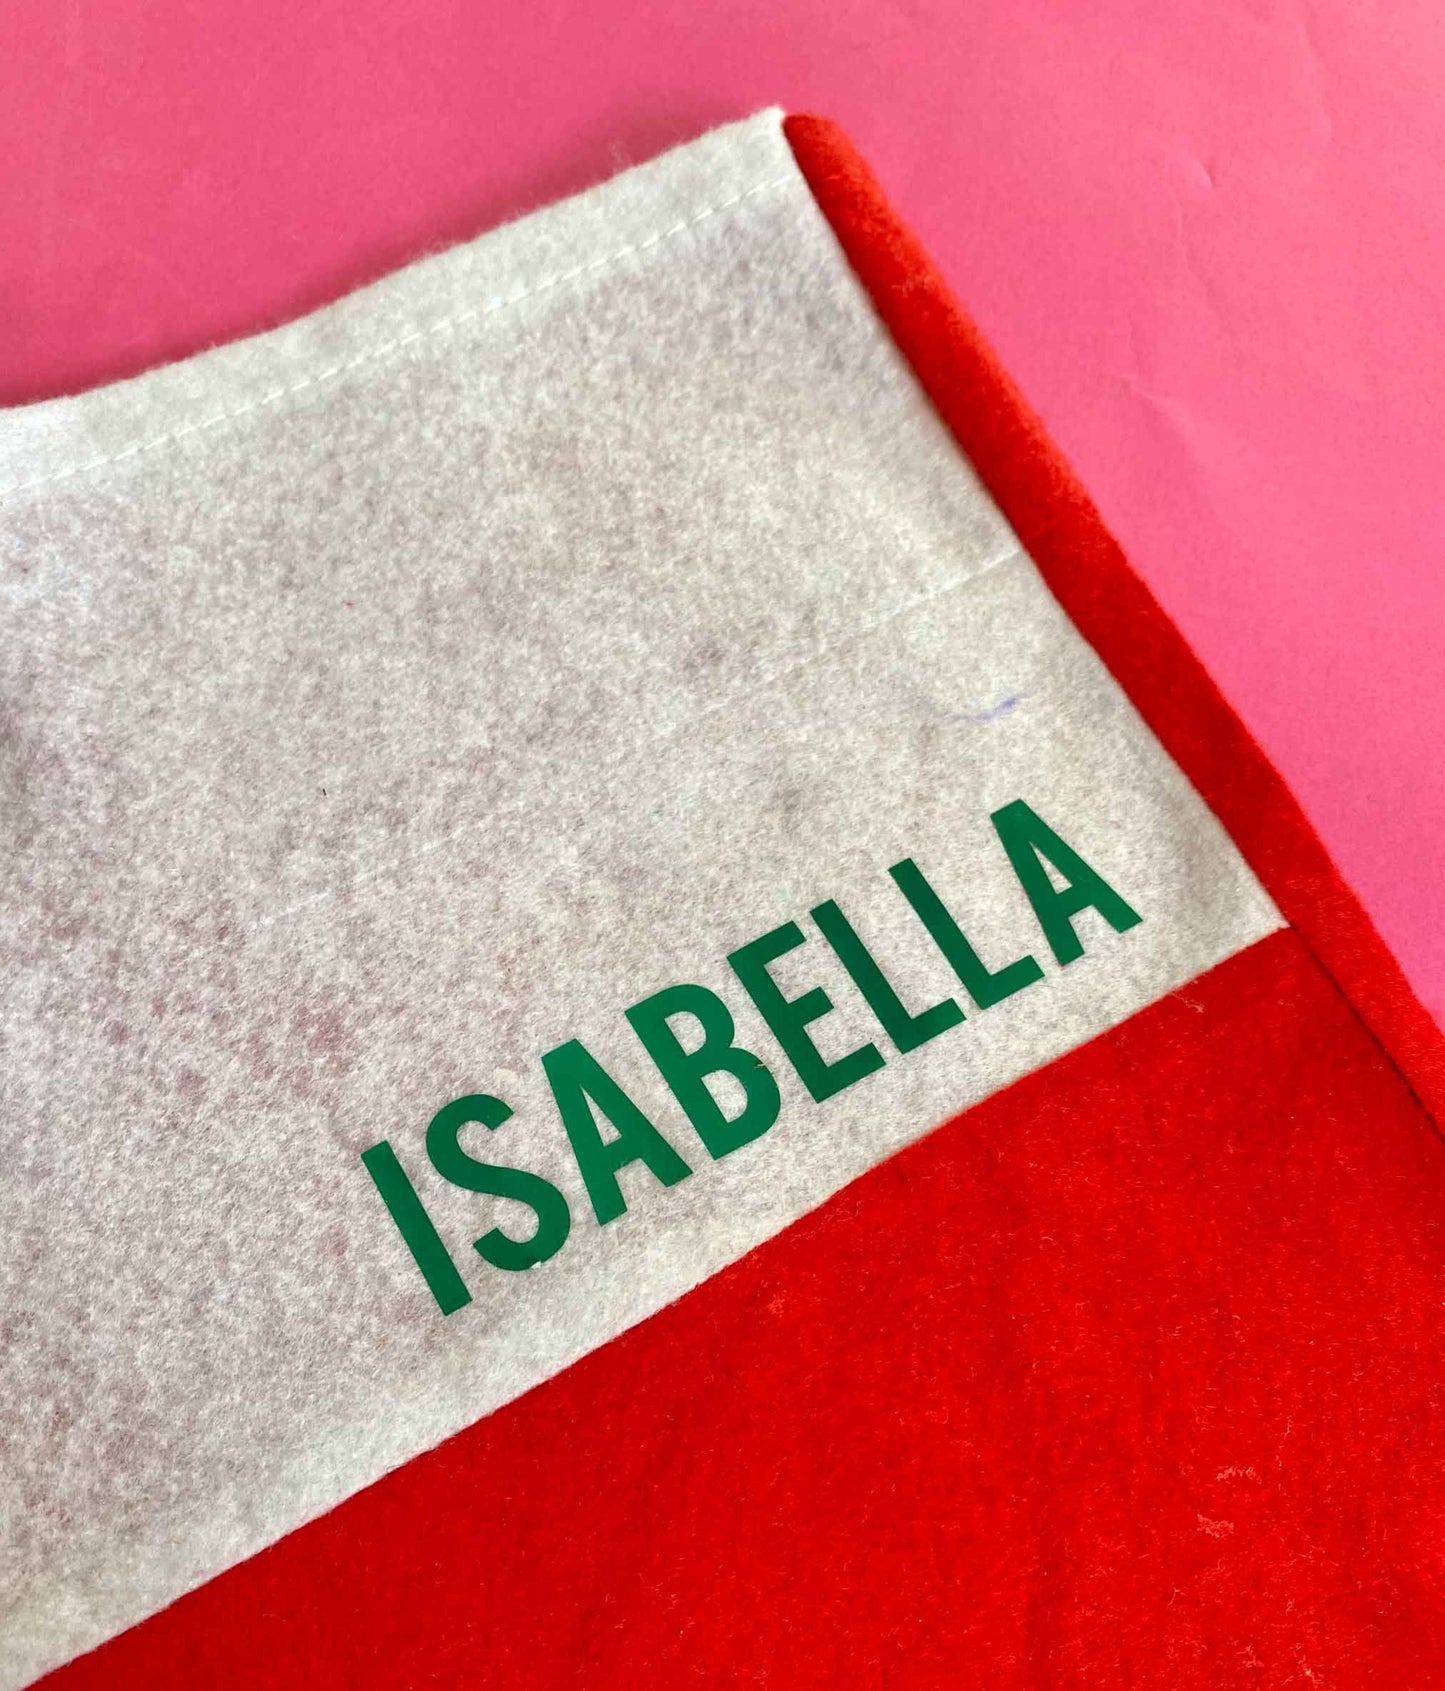 Isabella Personalised Giant Christmas Stocking SALE